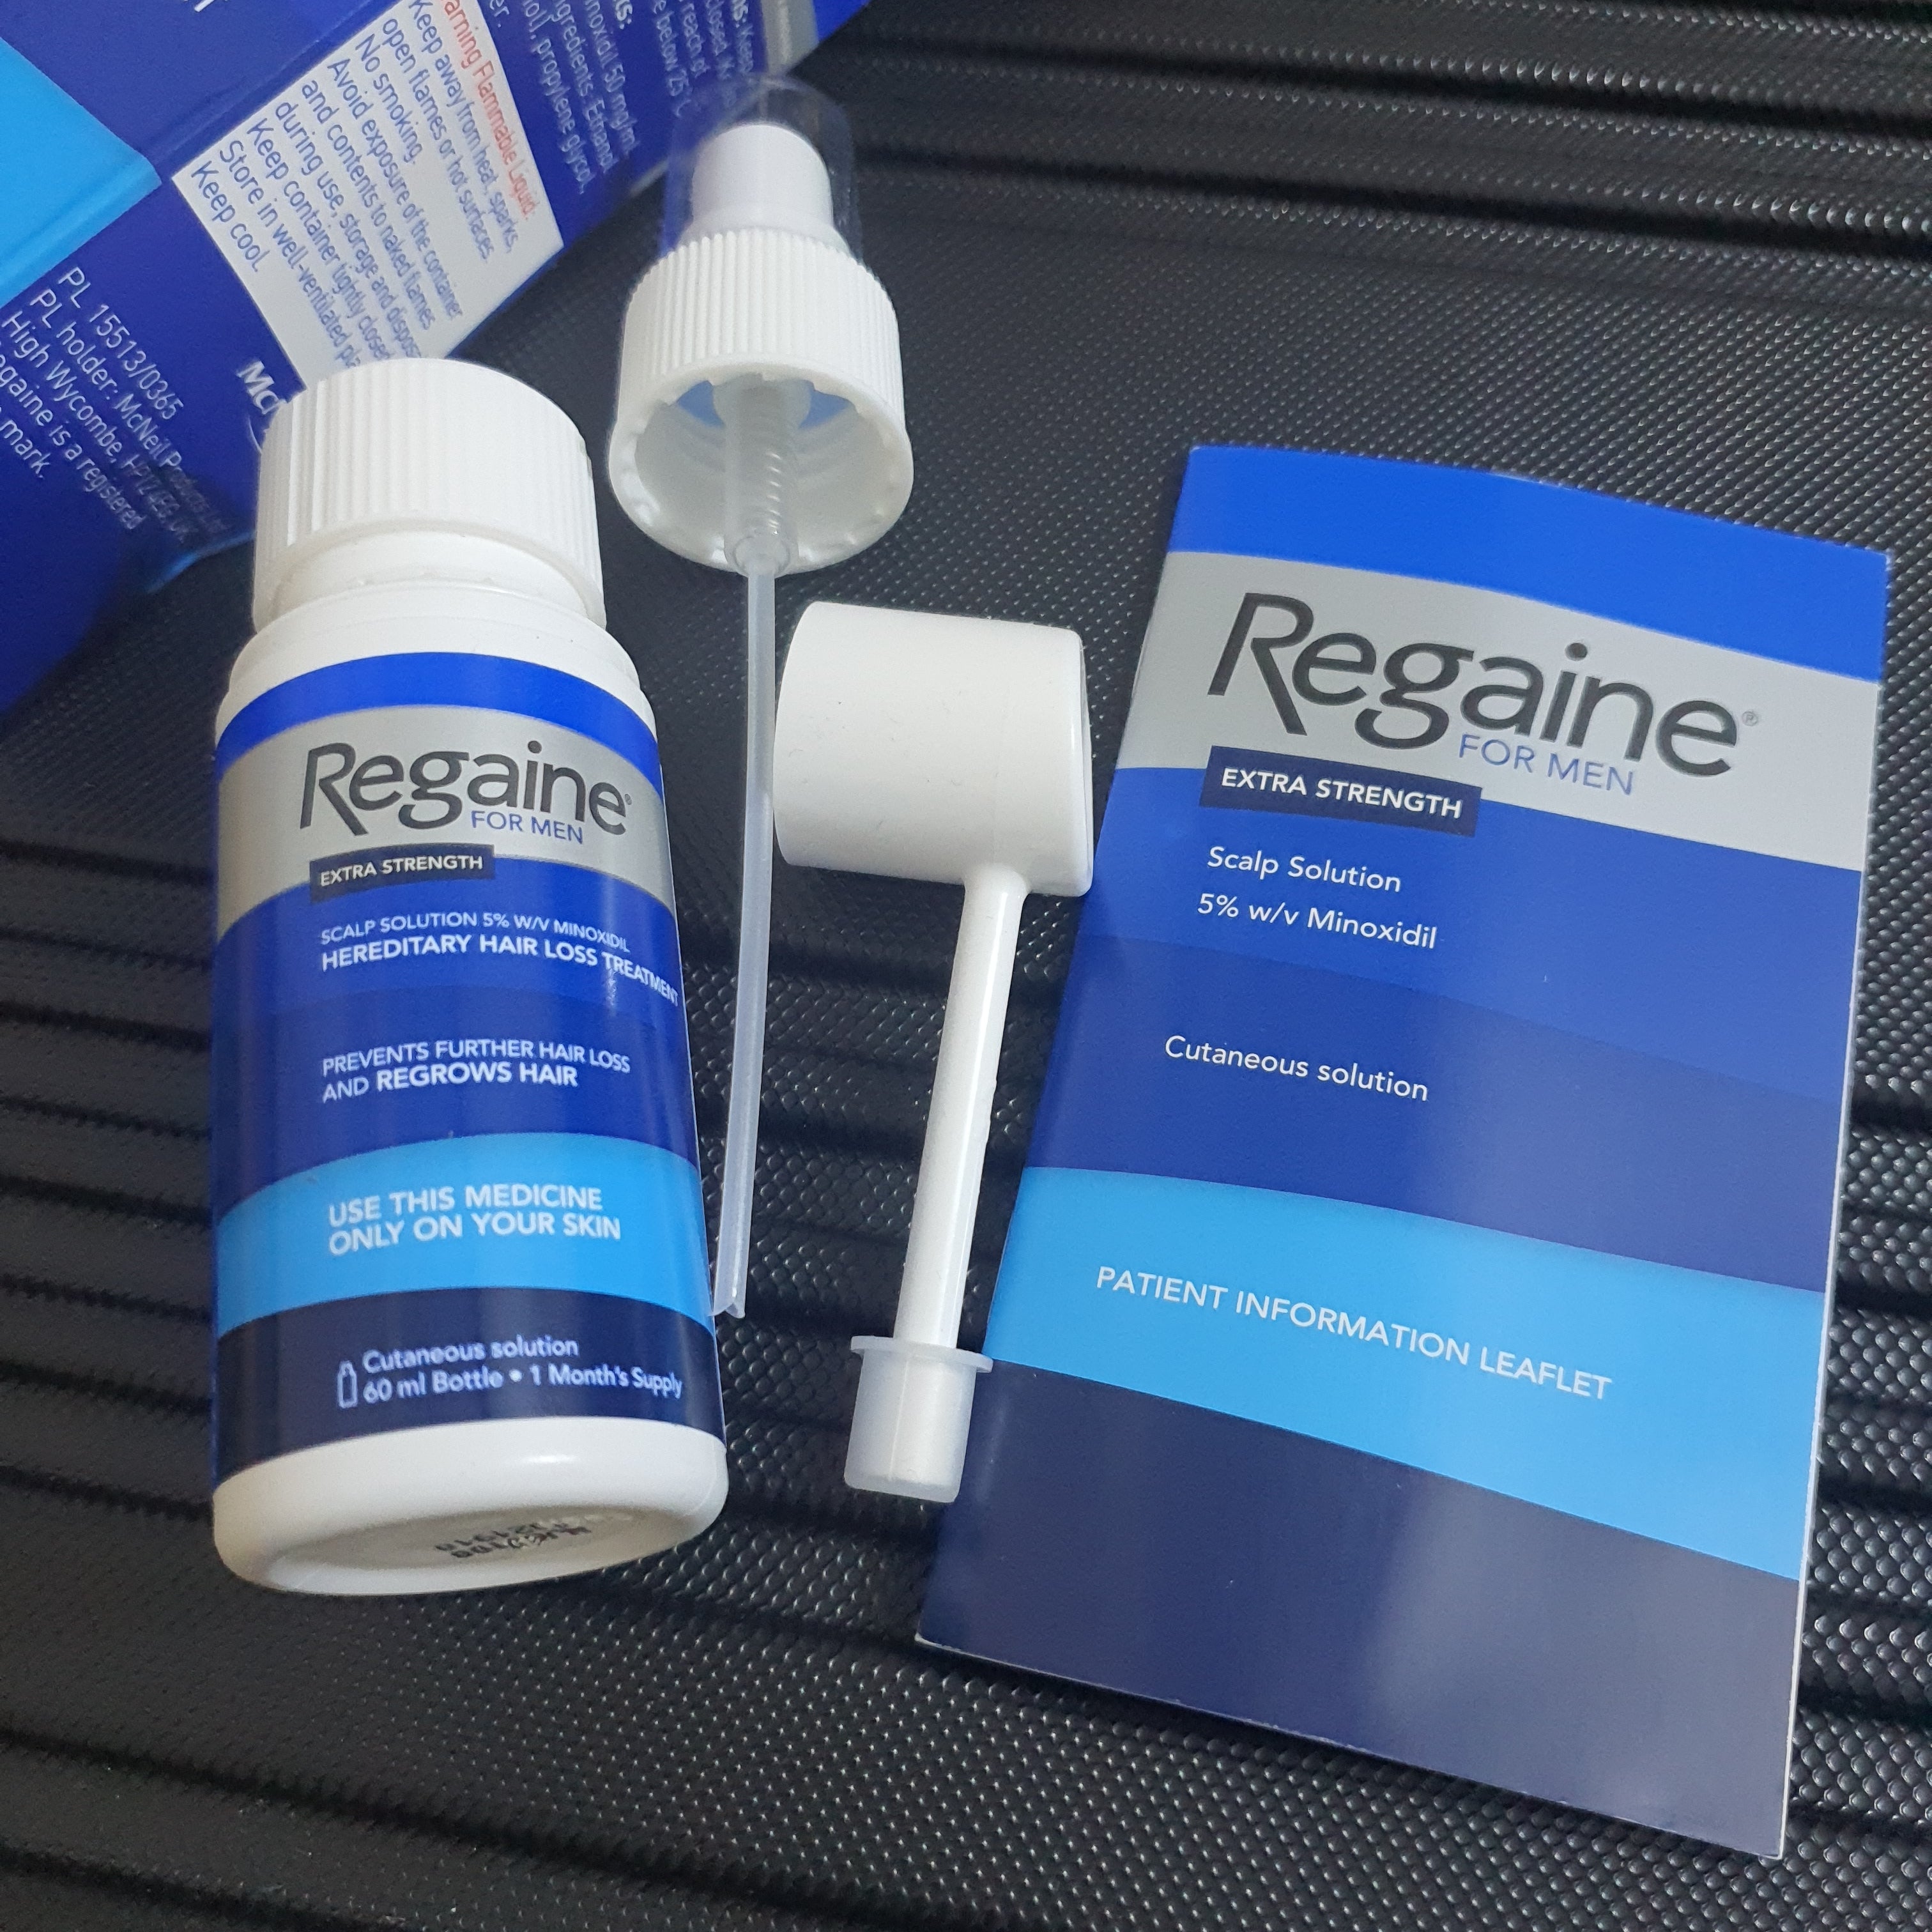 Regaine for Men Extra Strength Scalp Solution 5% W/V Minoxidil - 3 Months Supply

روجين البخاخ 3 علب مينوكسديل البخاخ مينوكسيديل ريجين